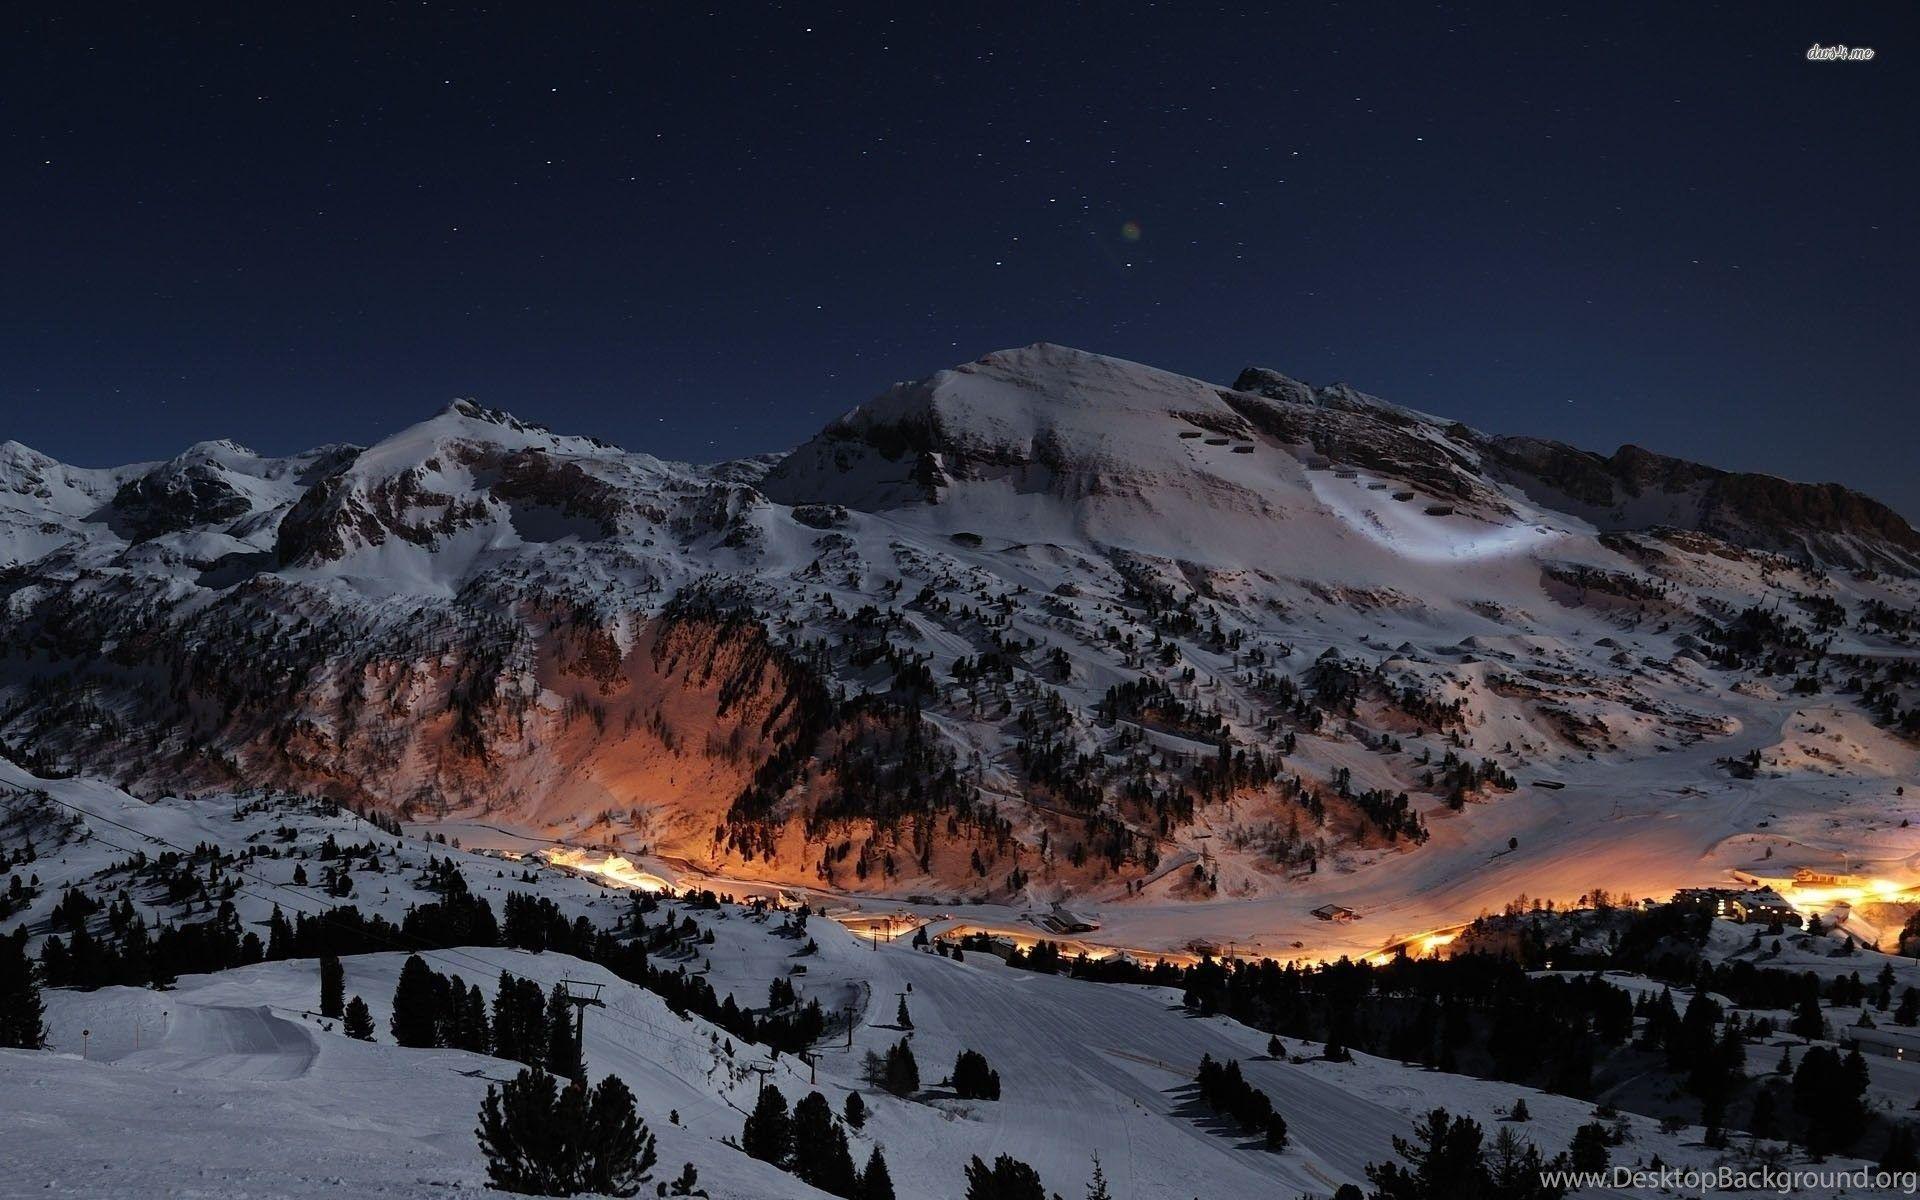 Ski Slopes At Night Wallpaper Nature Wallpaper Desktop Background